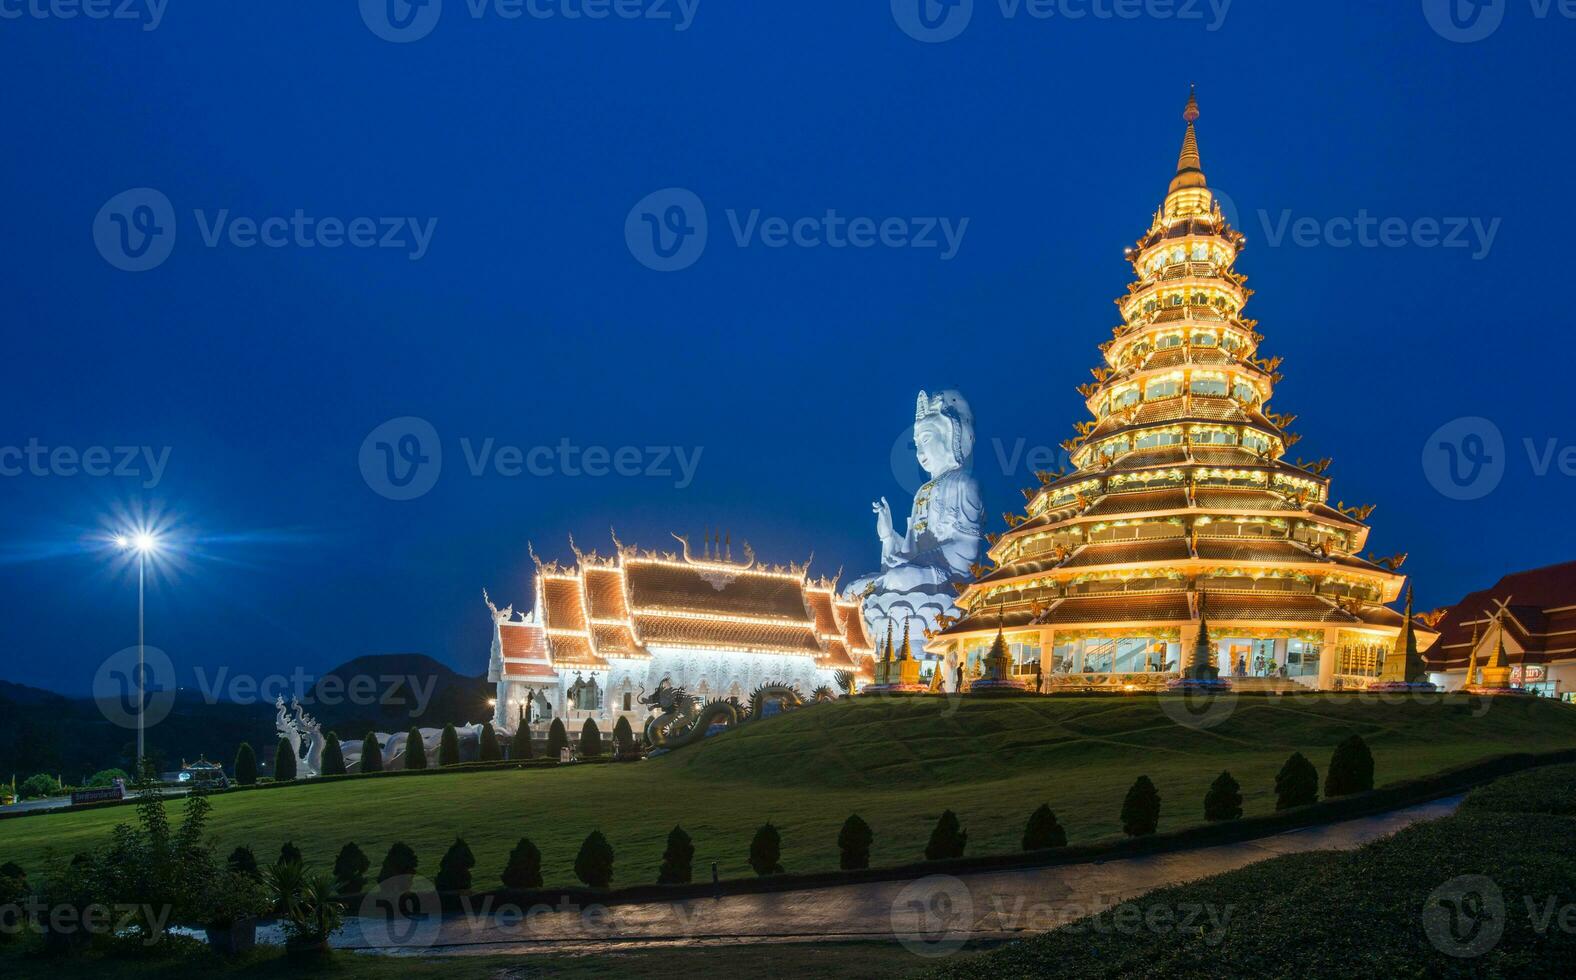 The Chinese pagoda style of Wat Huay Pla Kang in Chiang Rai province of Thailand at night. photo